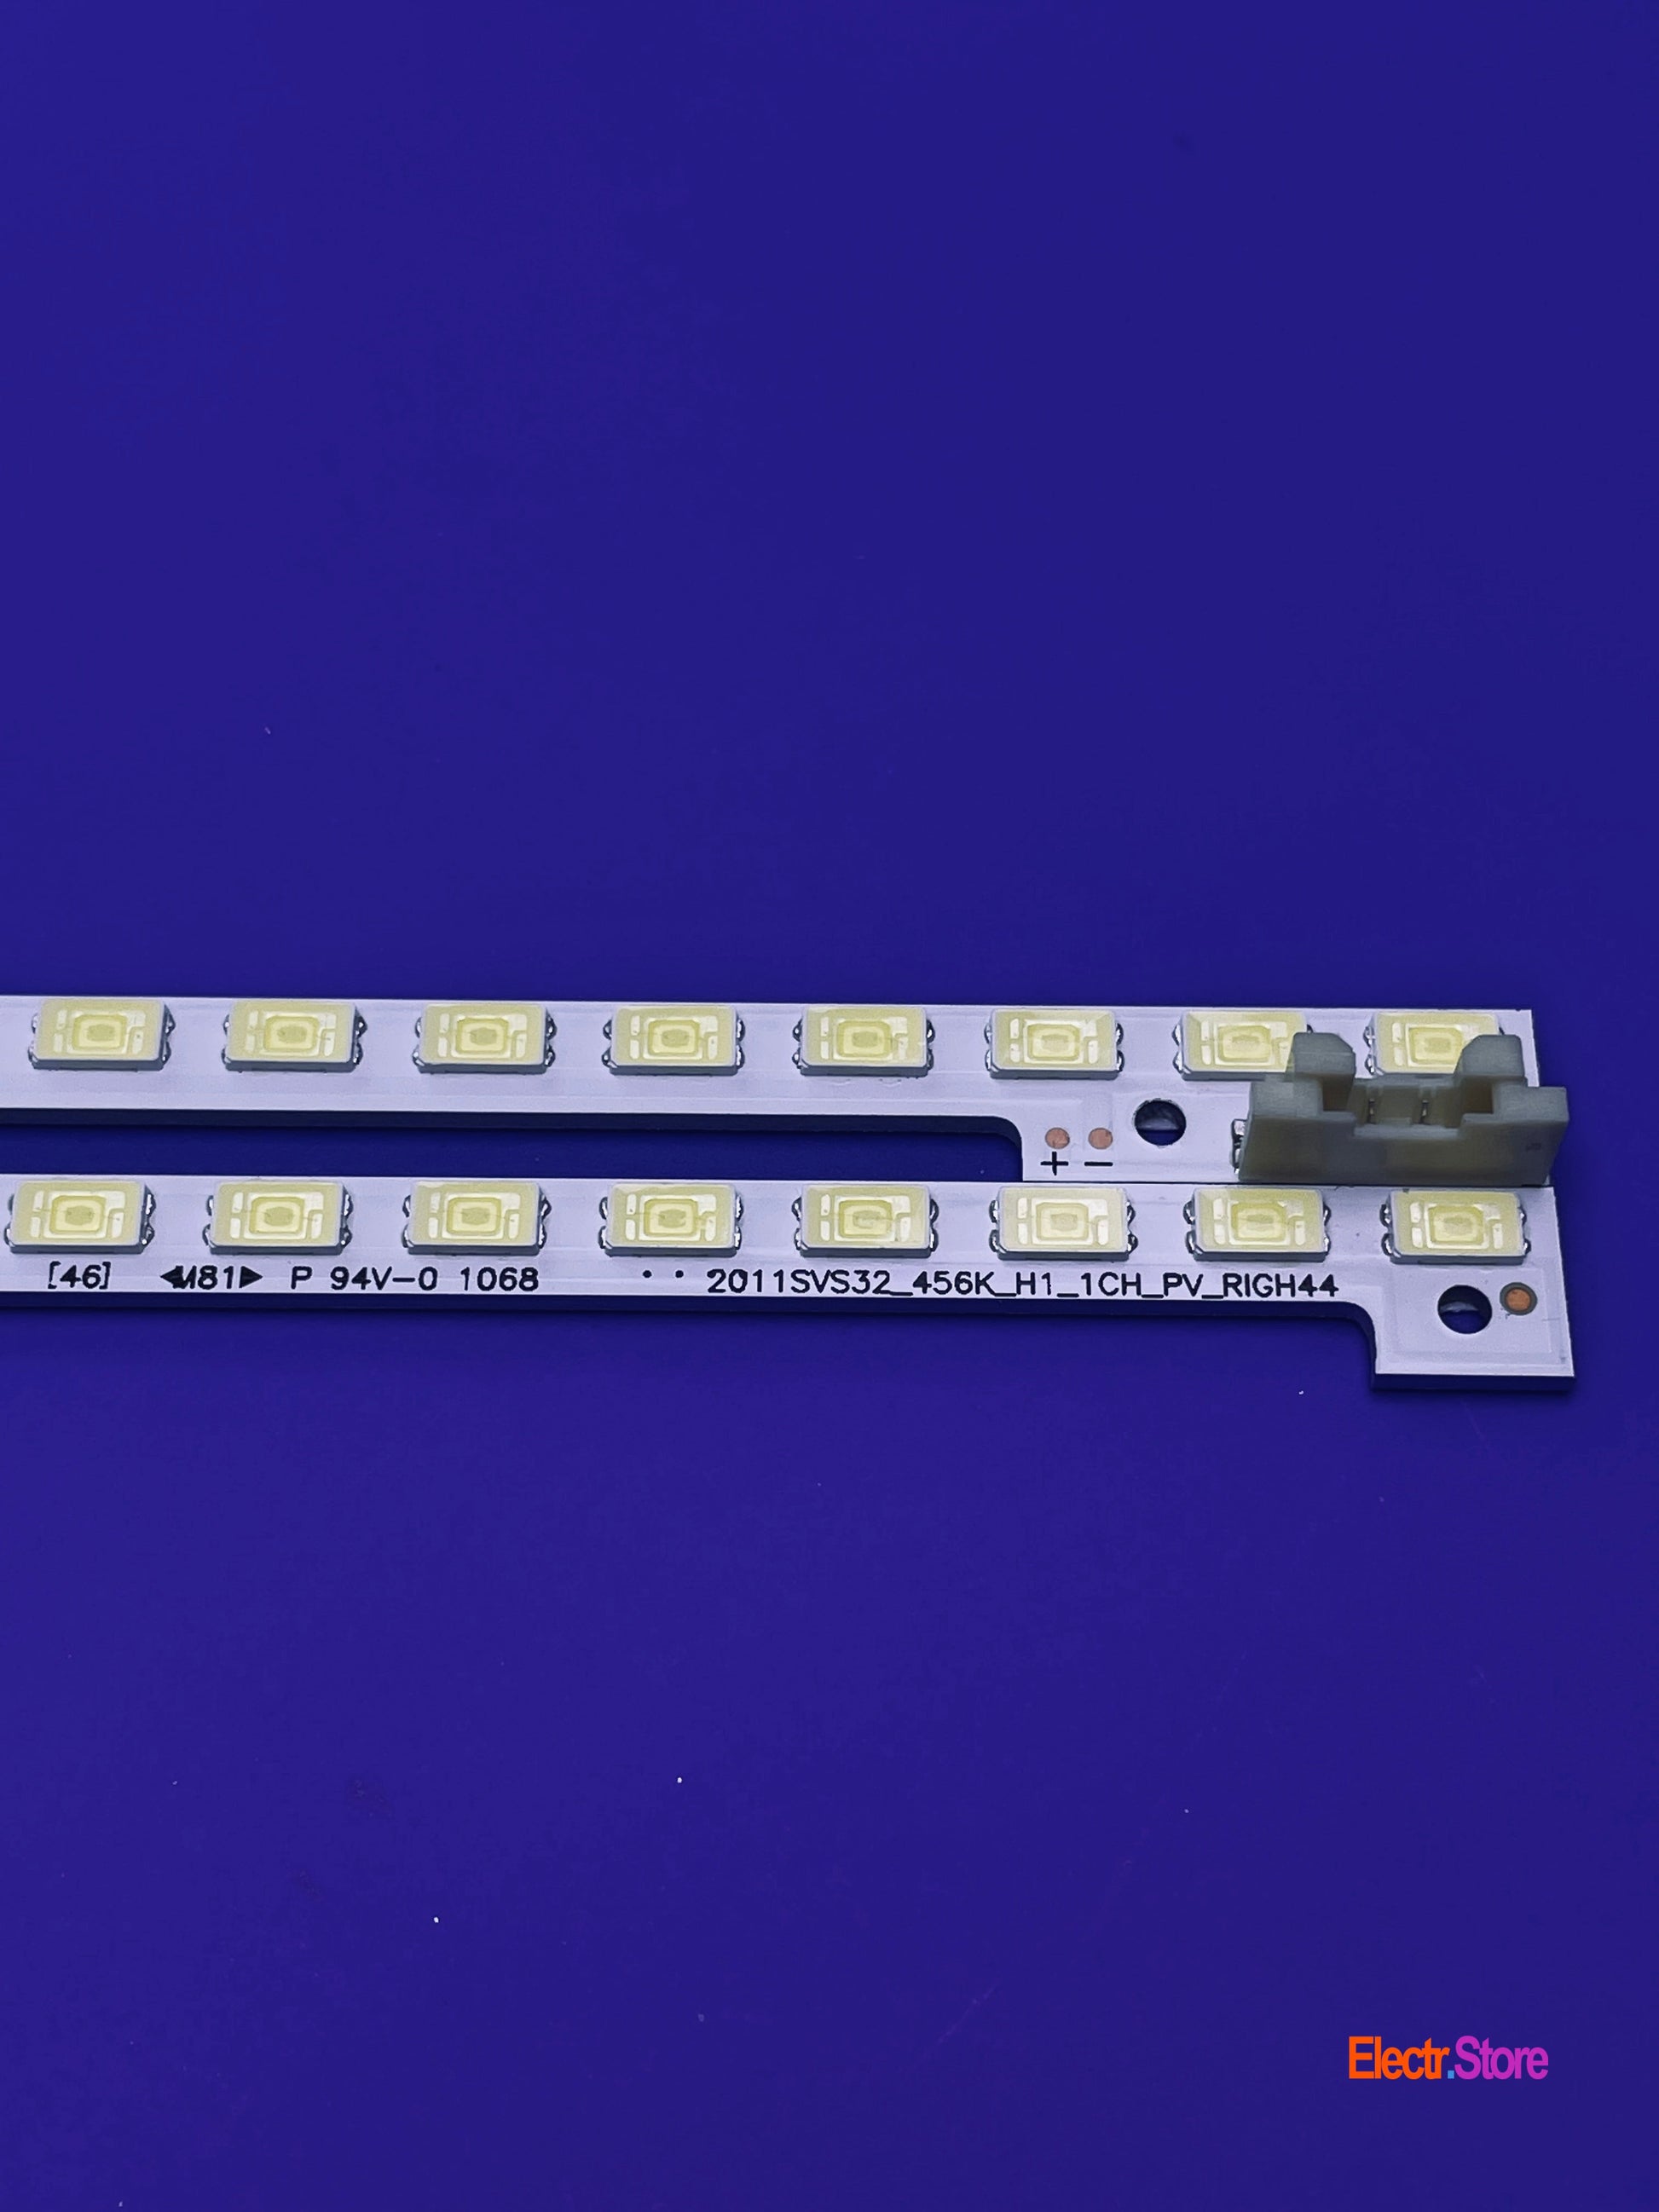 LED Backlight Strip Kits, 2011SVS32_456K_H1_1CH_PV_LEFT44/RIGHT44, JVG4-320SMA-R2/JVG4-320SMB-R2, BN64-01634A, 2X44LED (2 pcs/kit), for TV 32" PANEL: LTJ320HN01-H, LTJ320HN01-J, LD320CSC-C1, LD320CSC-C2 2011SVS32 32" LED Backlights Matrix Samsung Electr.Store